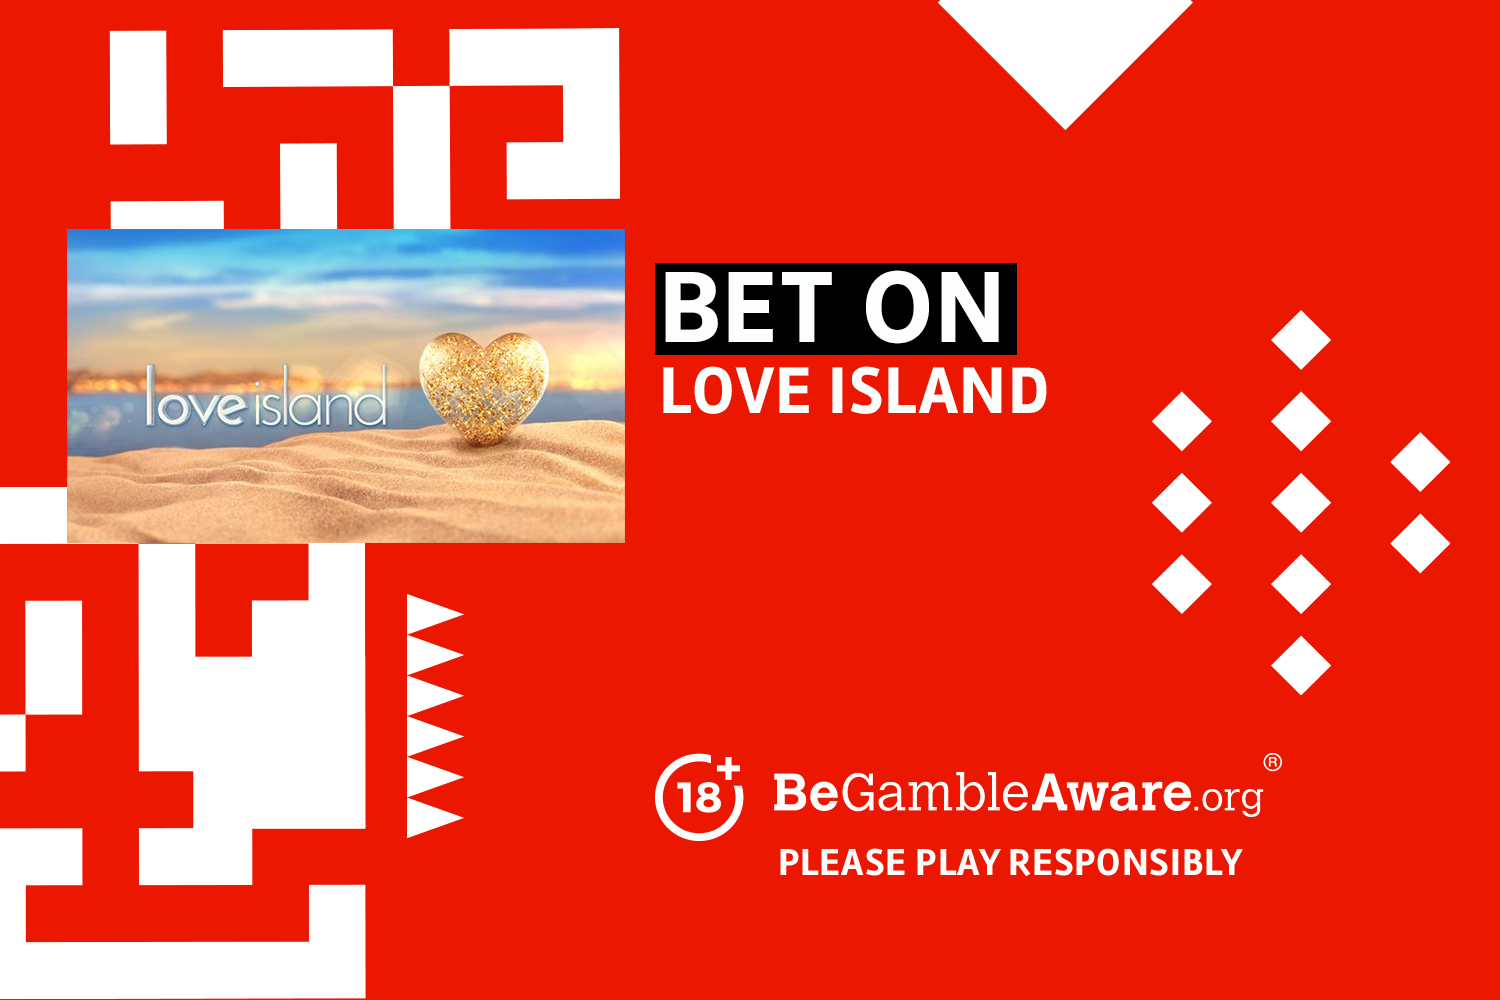 Bet on Love Island. 18+ BeGambleAware.org Please play responsibly.